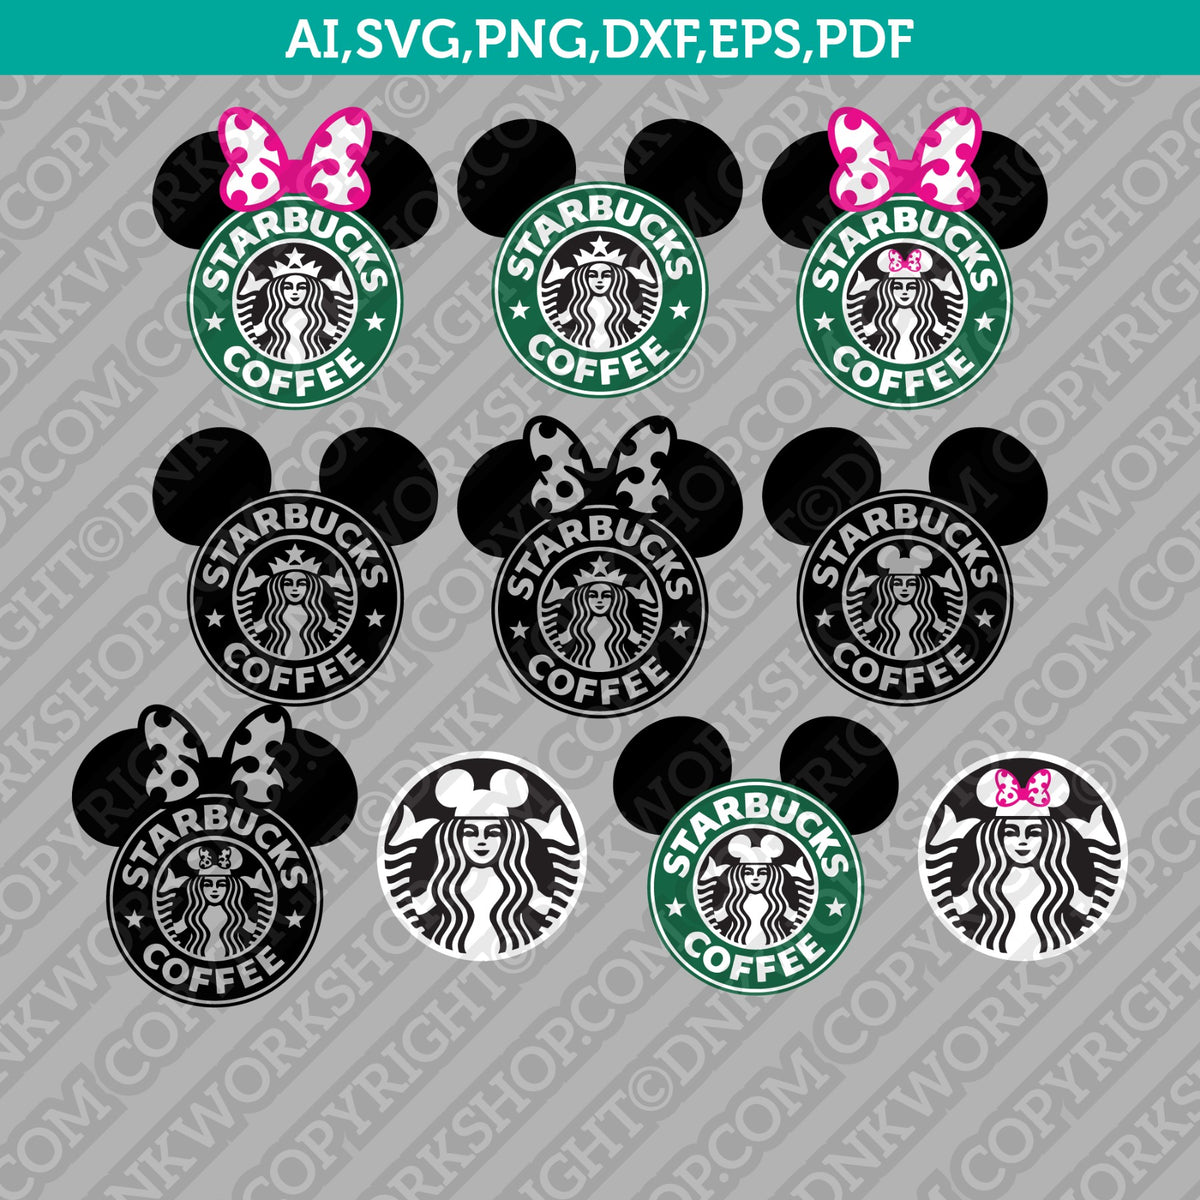 Starbucks Cup Decal, Starbucks Stickers, Starbucks Tumbler, Personalized Starbucks  Decal, Vinyl Decal, Coffee Mug Decal -  Hong Kong